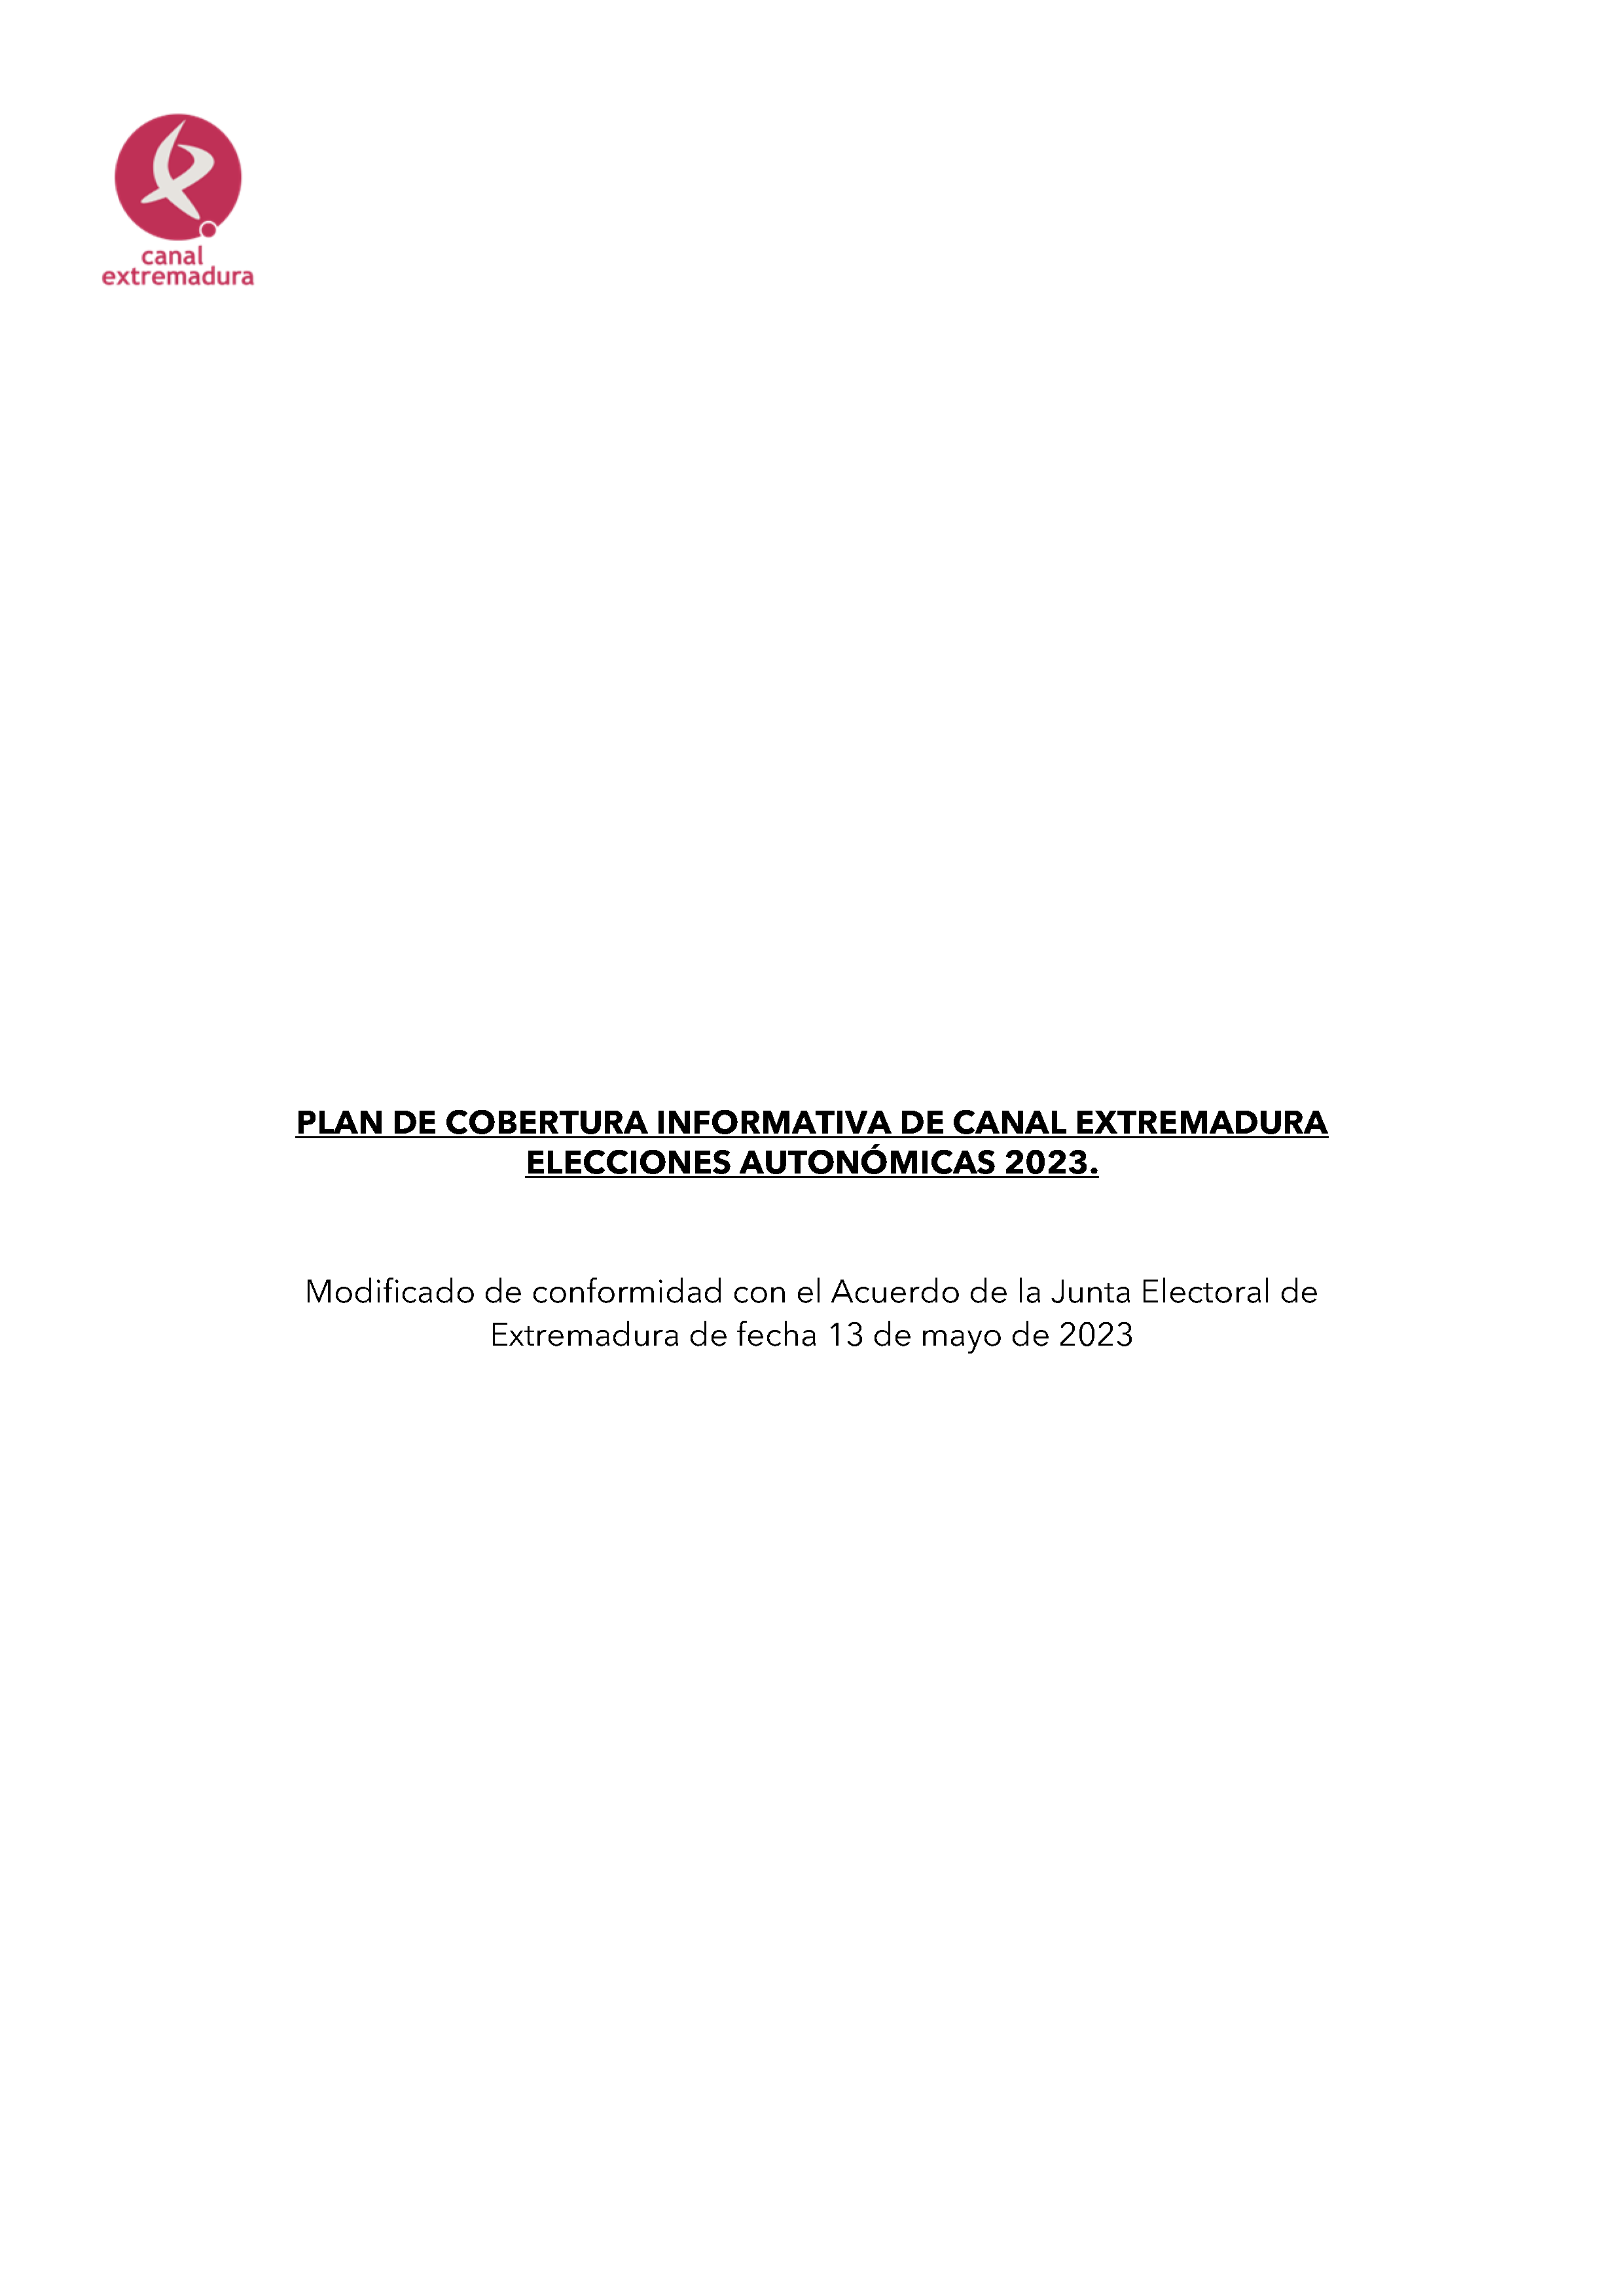 PLAN DE COBERTURA INFORMATIVA DE CANAL EXTREMADURA ELECCIONES AUTONÃ“MICAS 2023. Pag 1